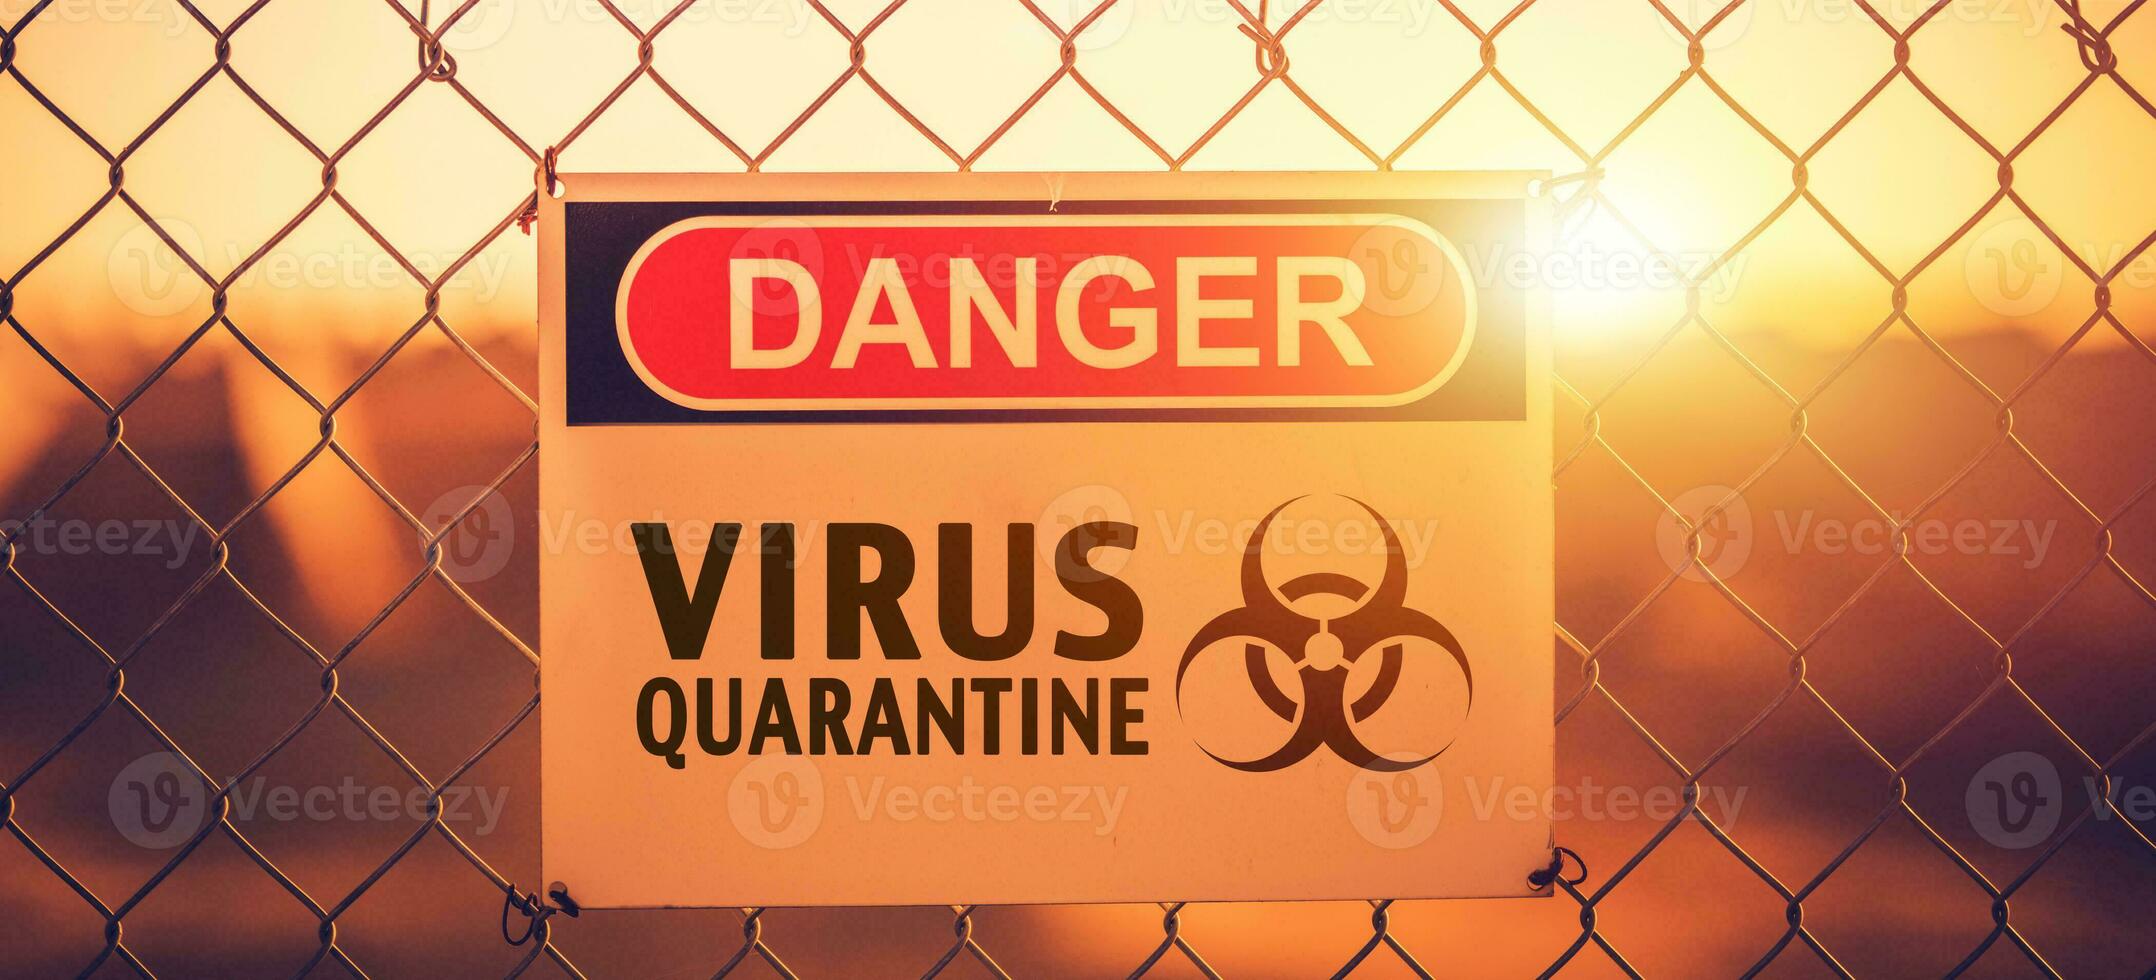 Danger Zone. Virus Quarantine Area Warning Sign on a Fance. photo